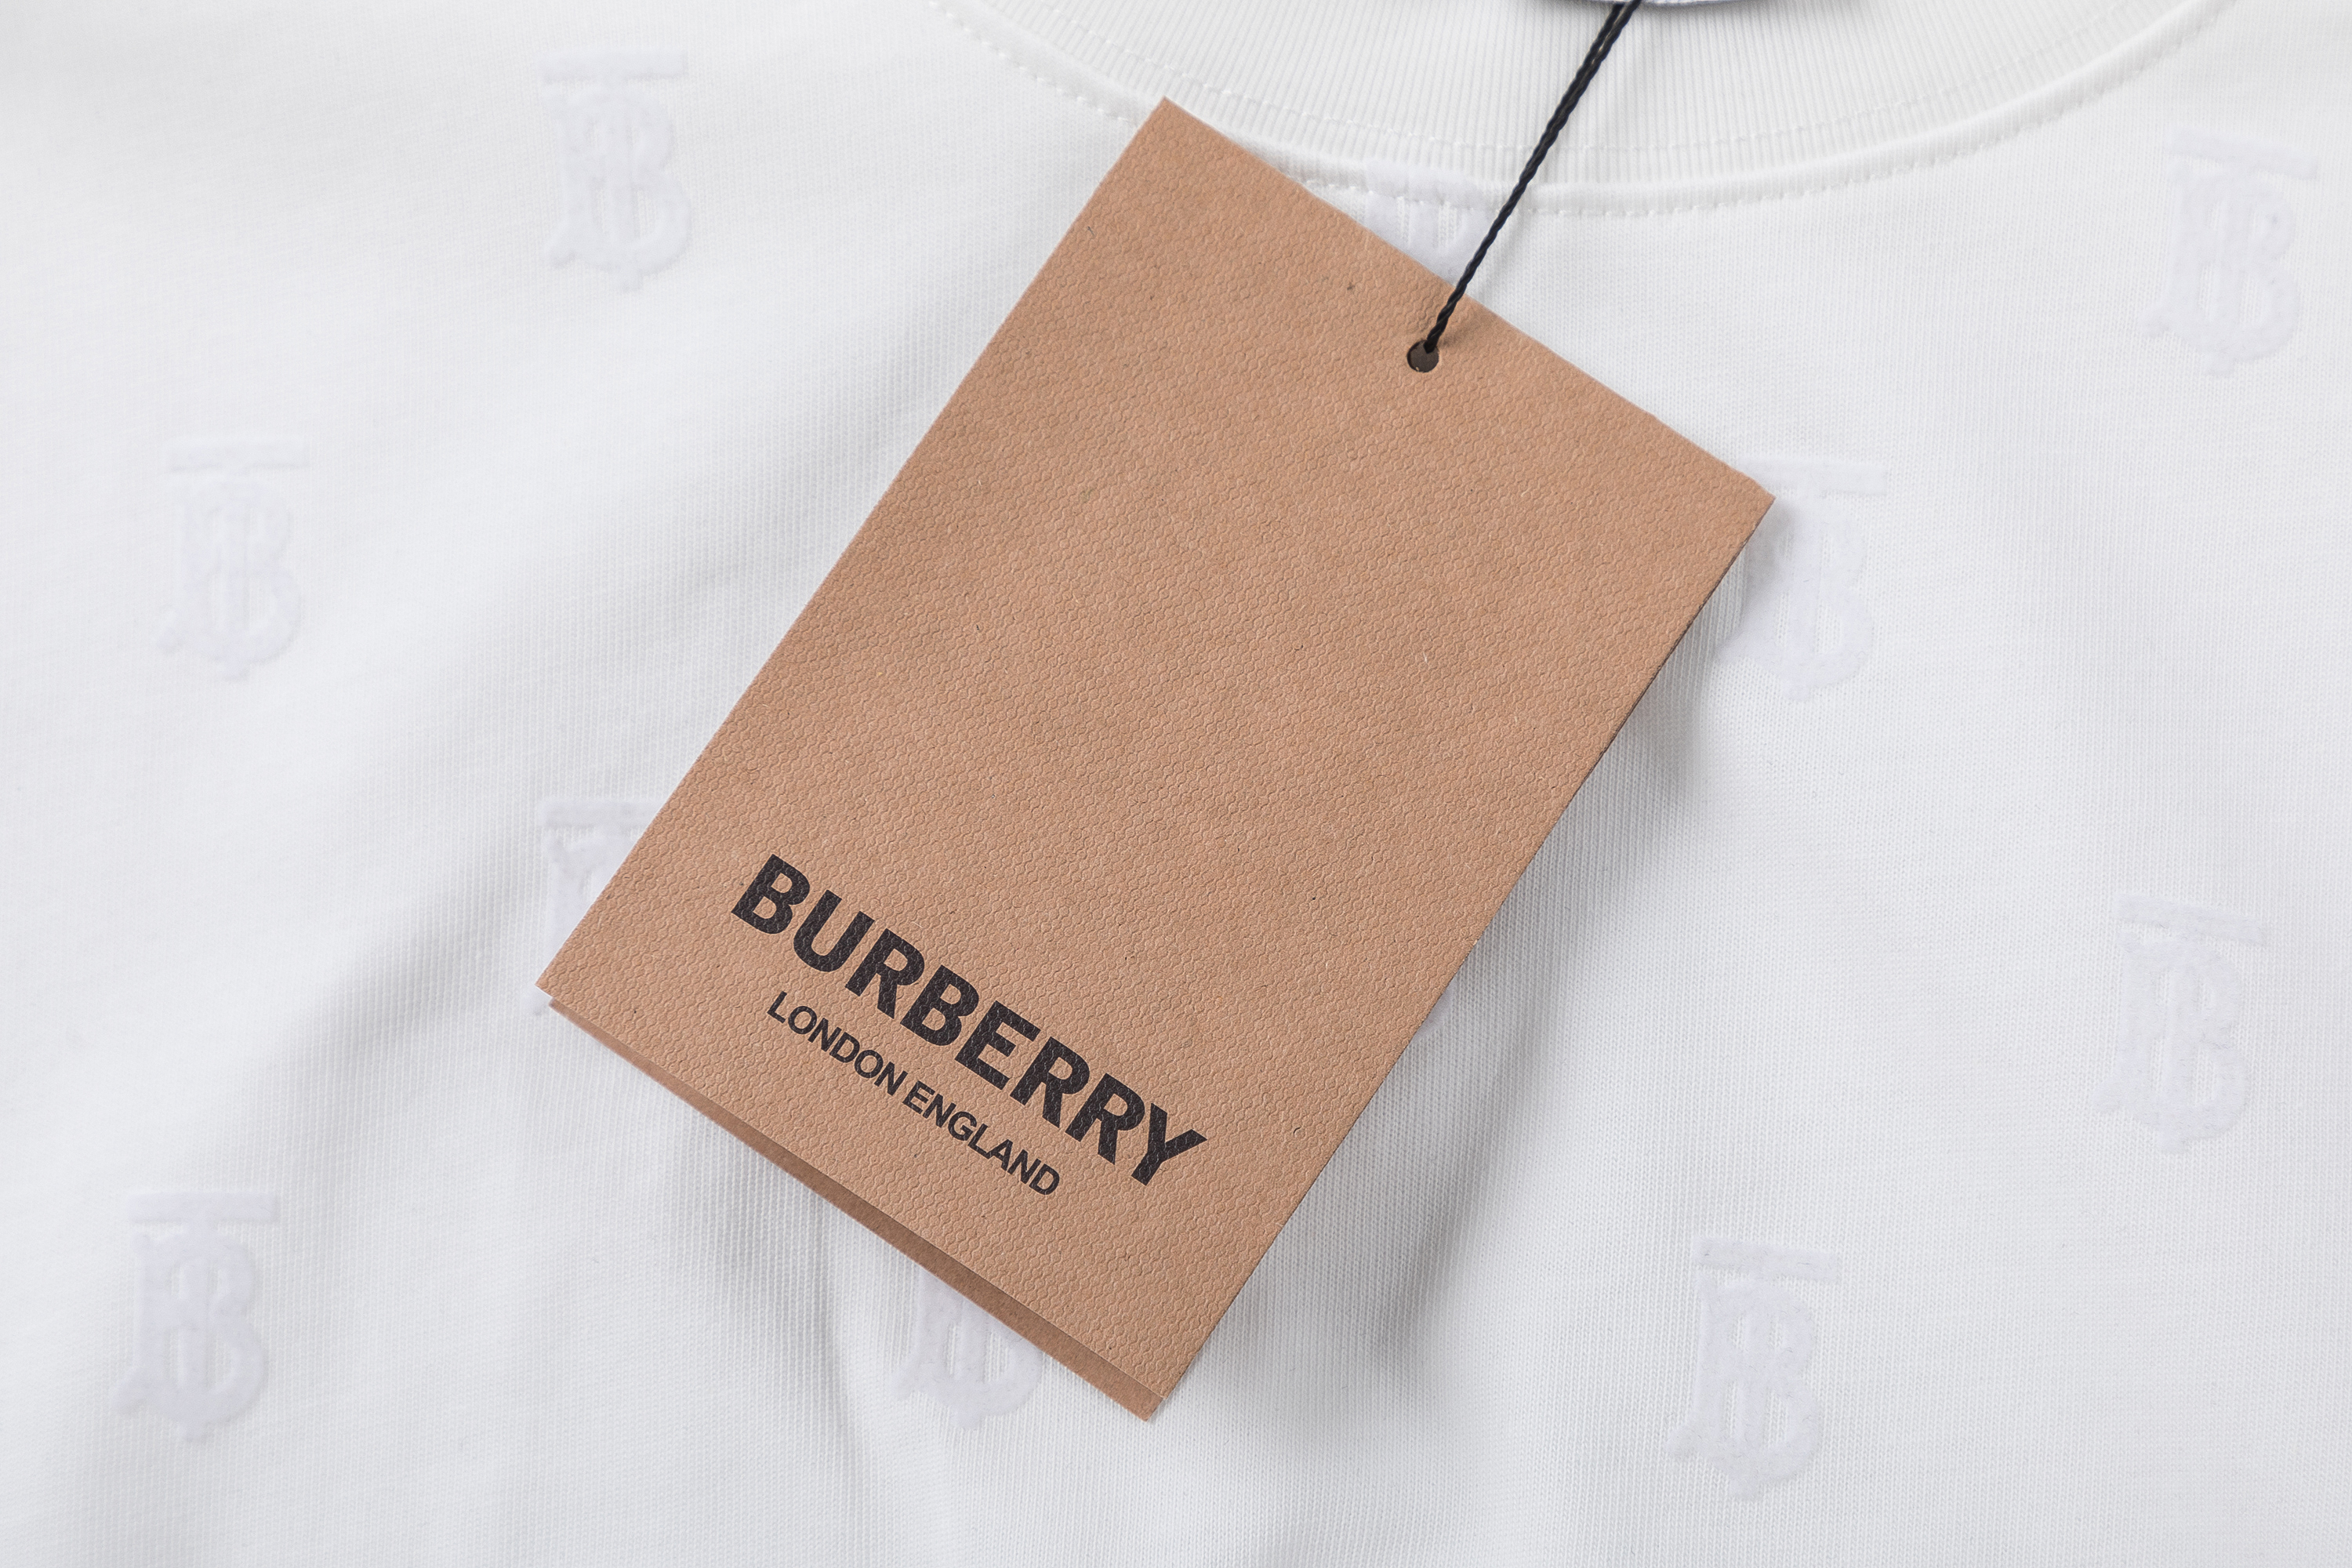 Burberry Short Sleeve T Shirts For Men # 272869, cheap Men's T shirts Short Sleeved, only $26!